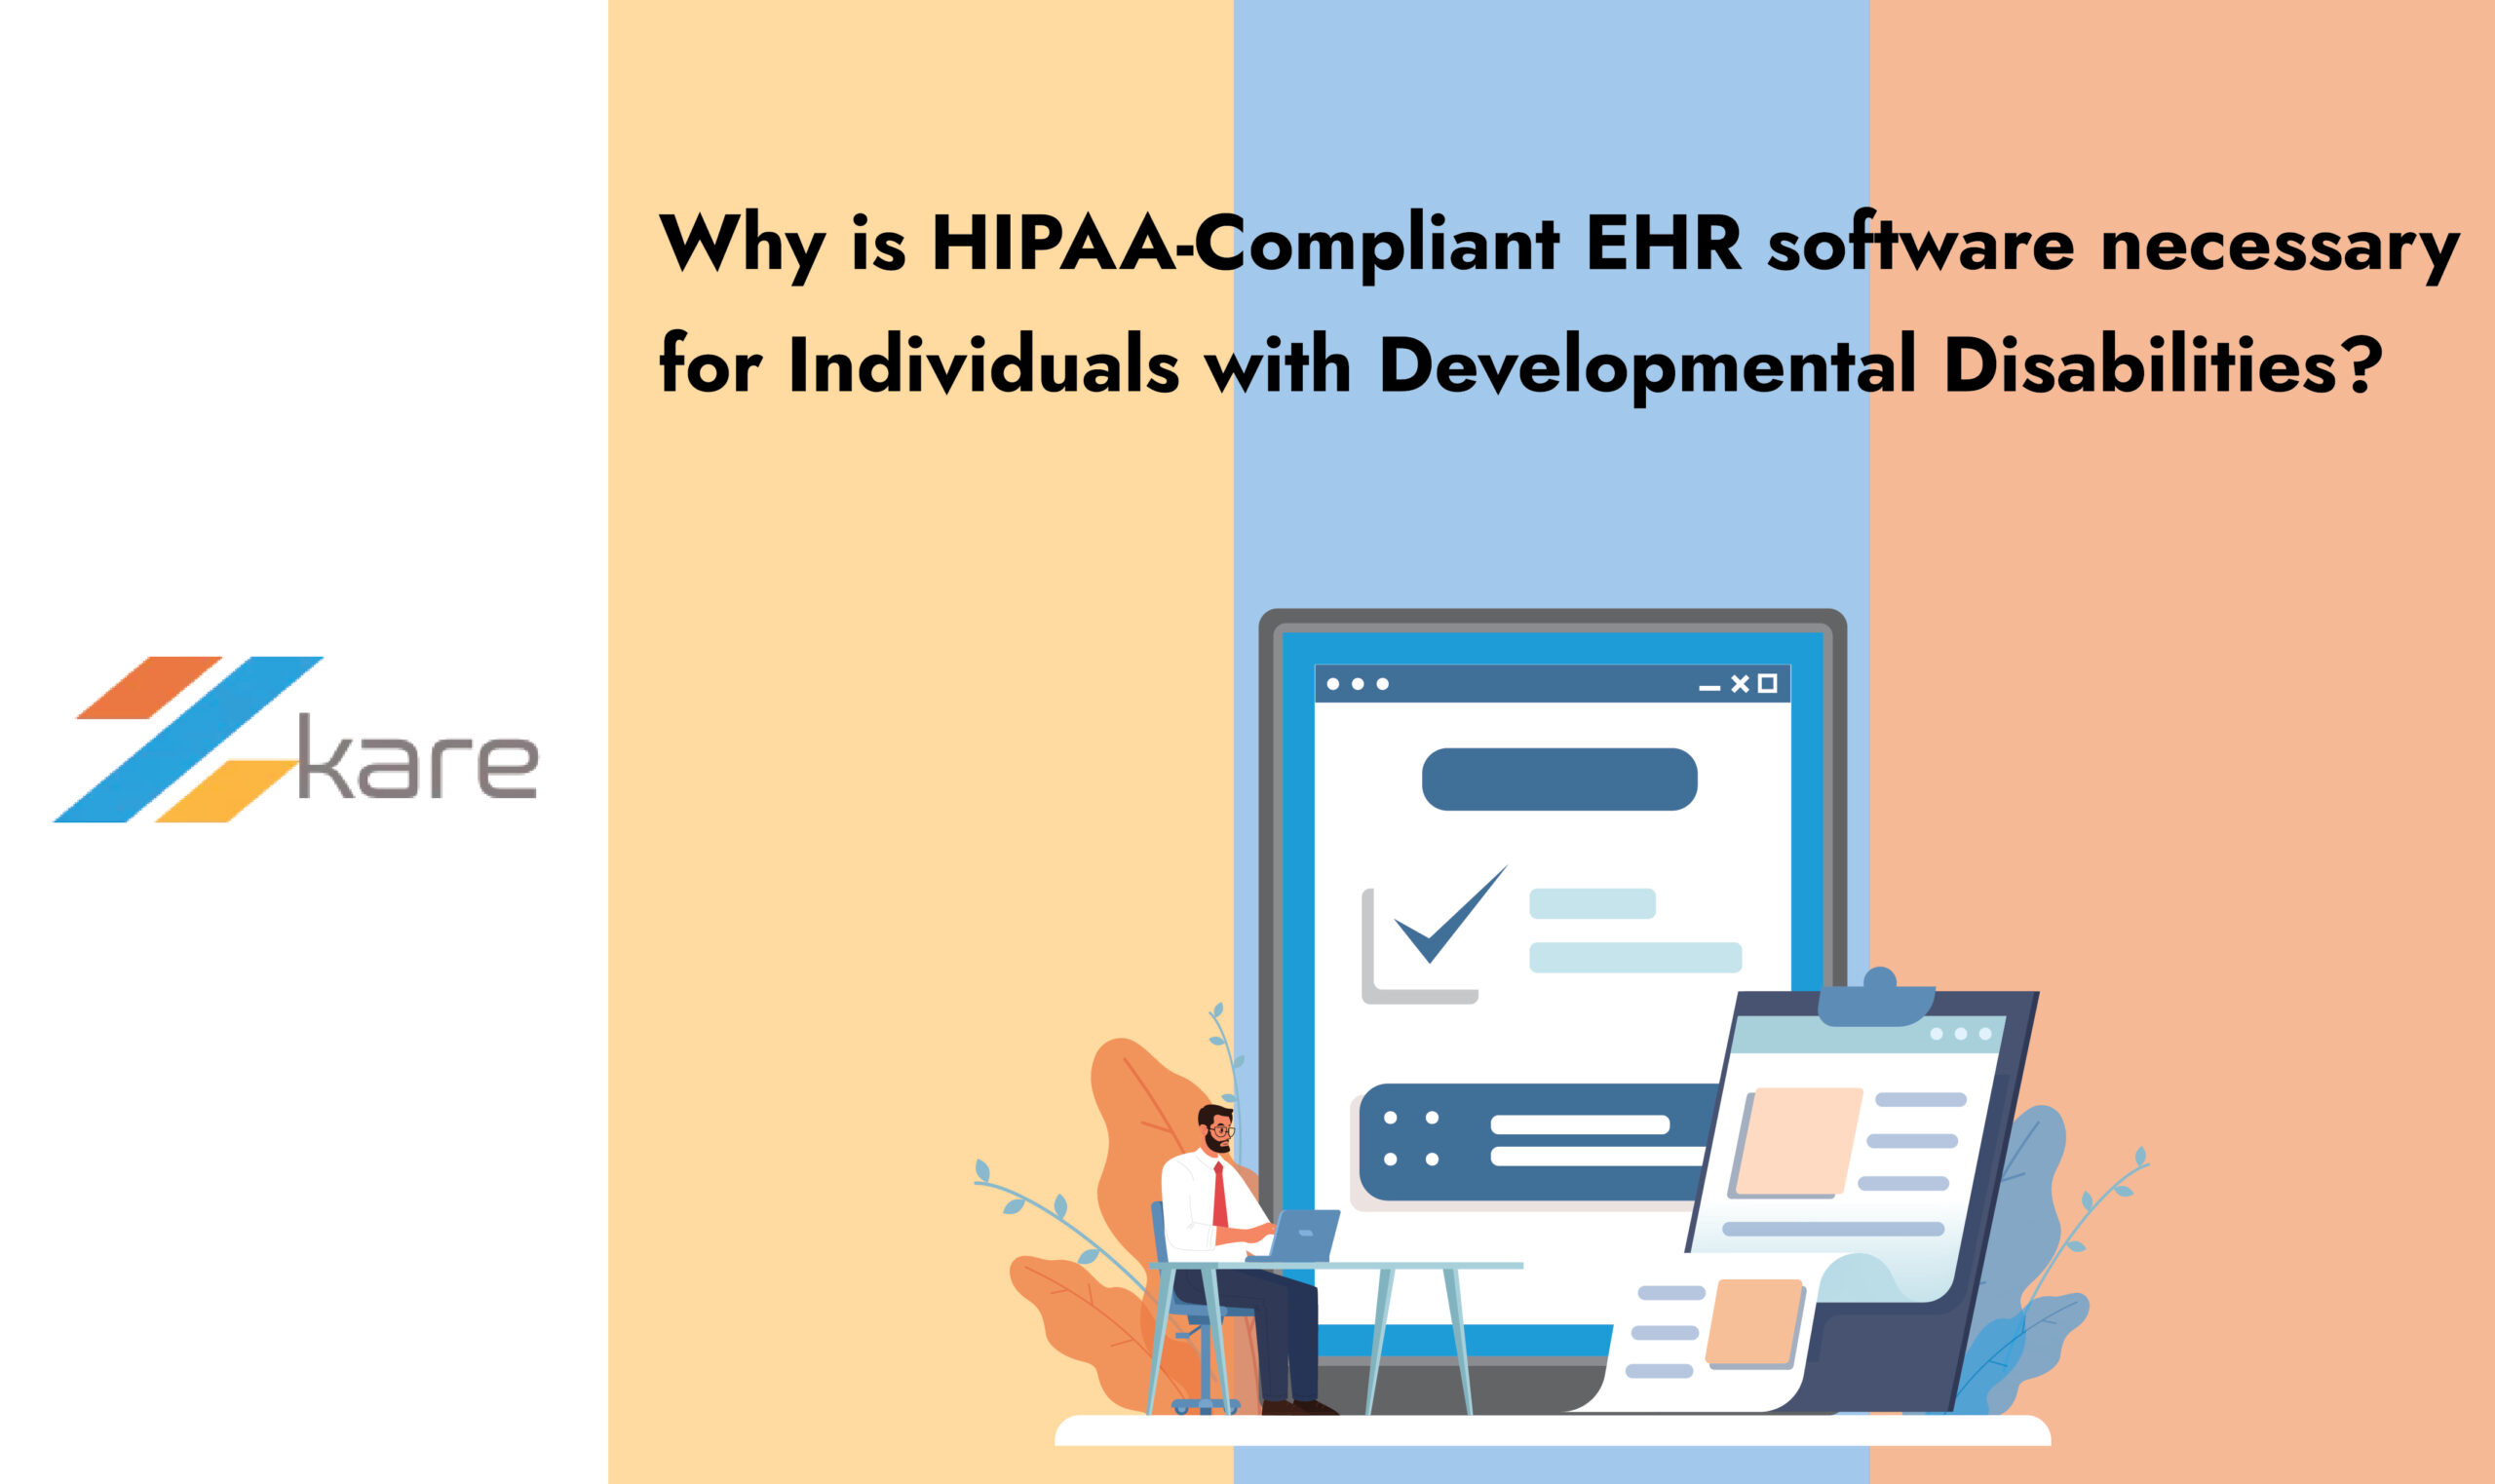 HIPAA-Compliant EHR software